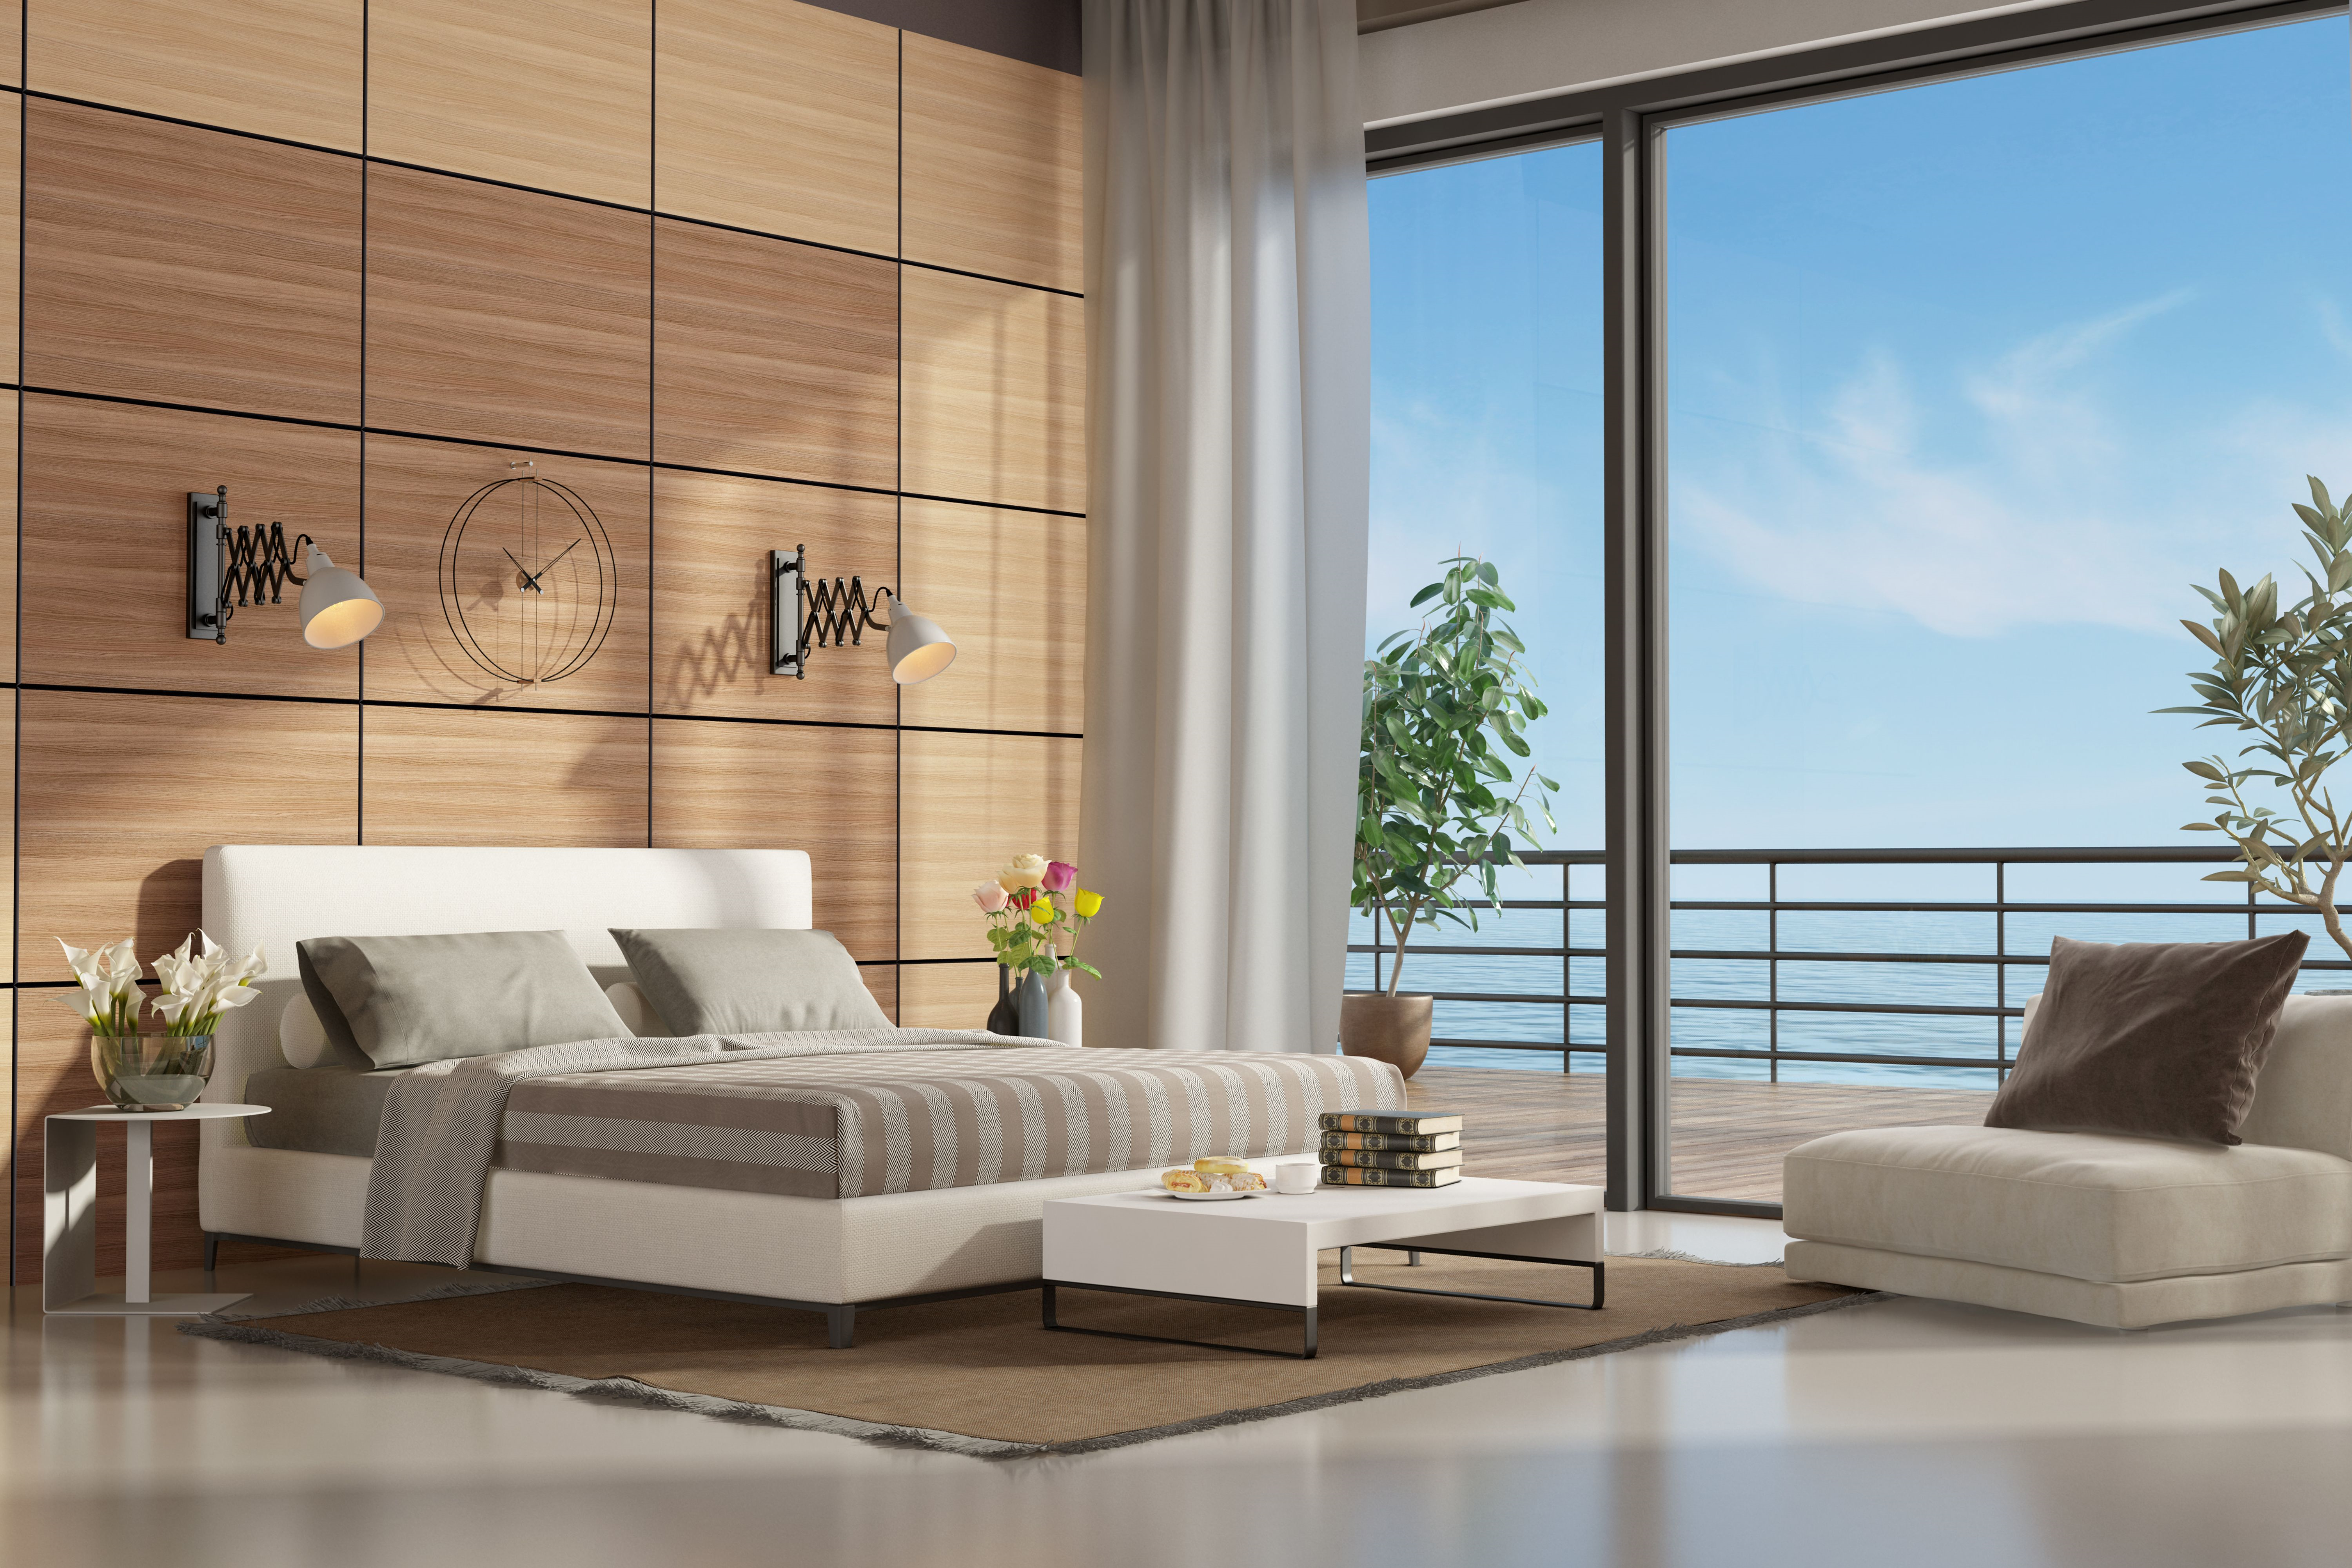 Modern bedroom villa furniture designs